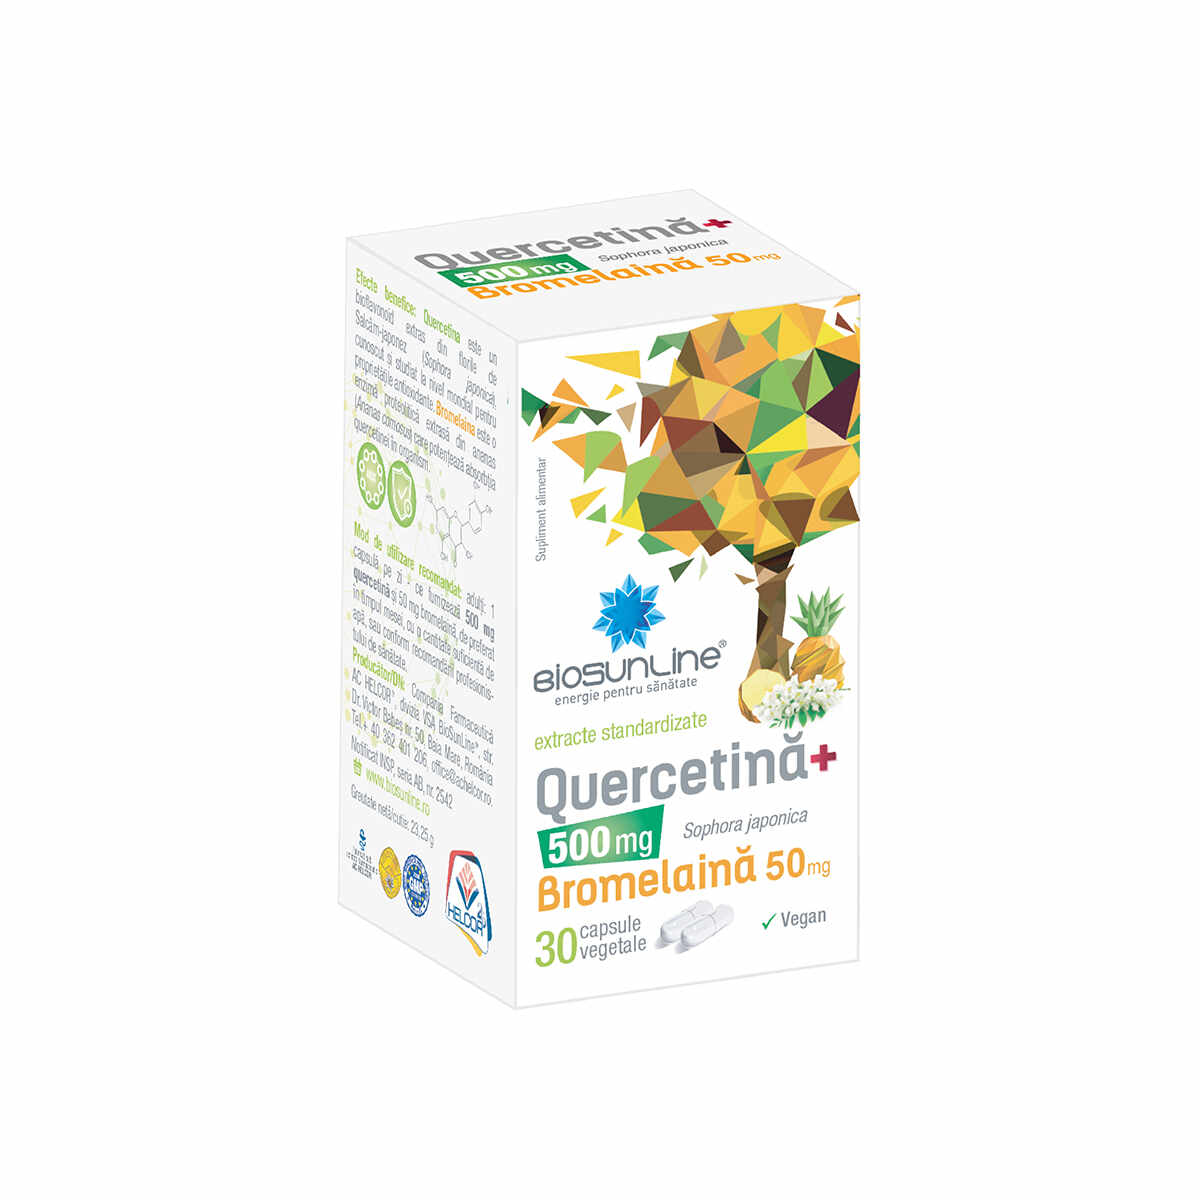 Quercetina 500mg + Bromelaina 50mg, 30 capsule vegetale, BioSunLine